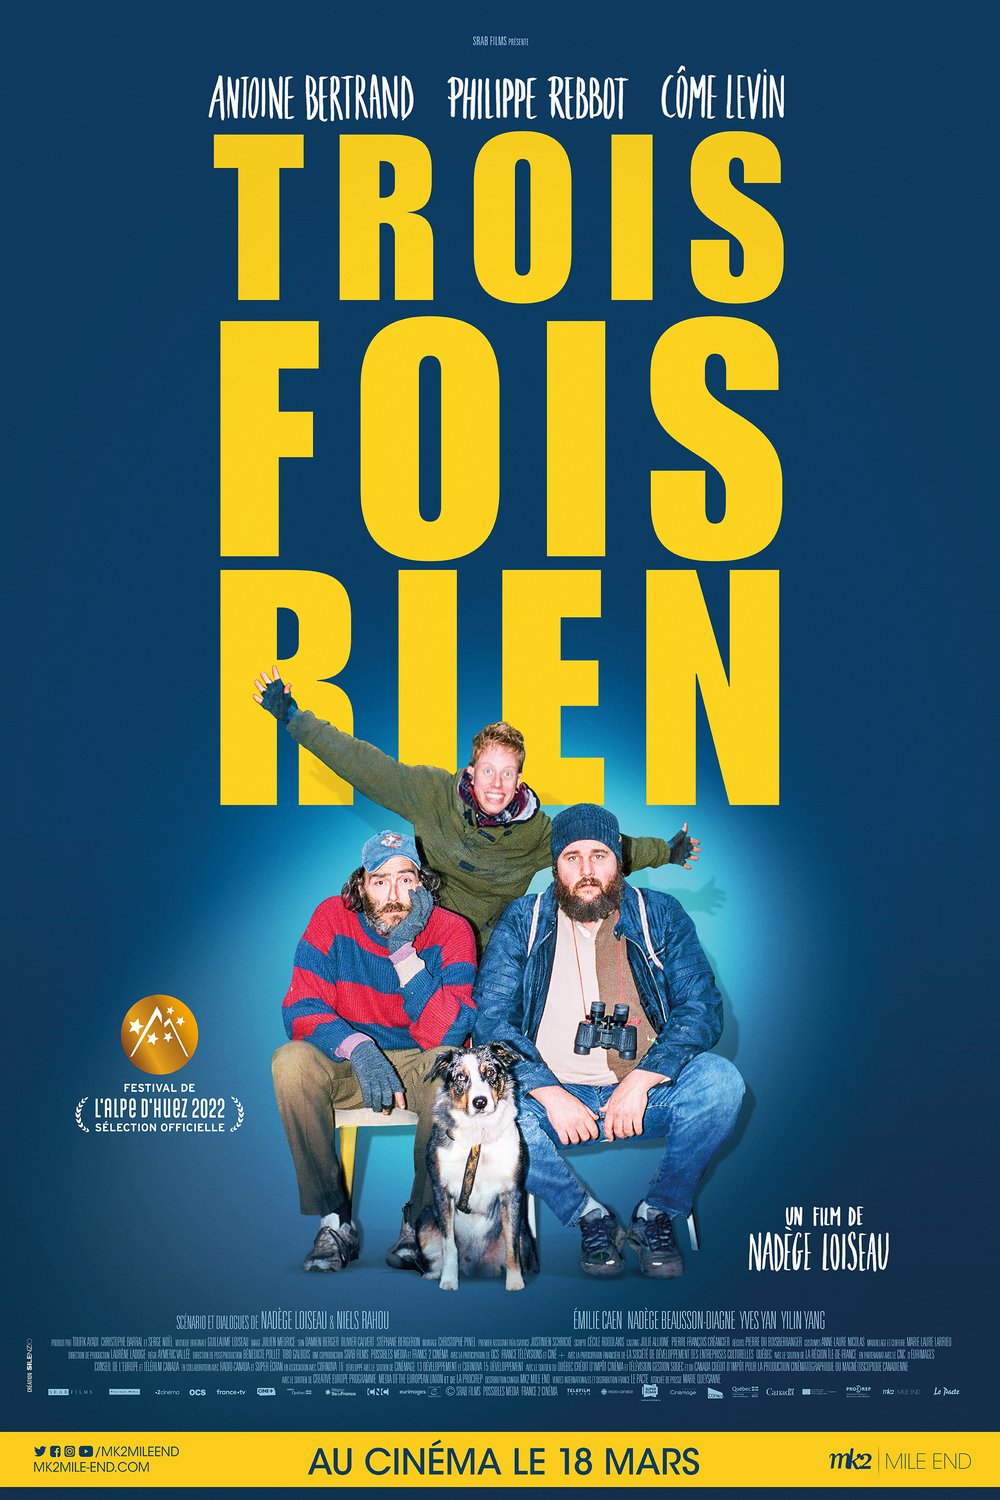 Poster of the movie Trois fois rien